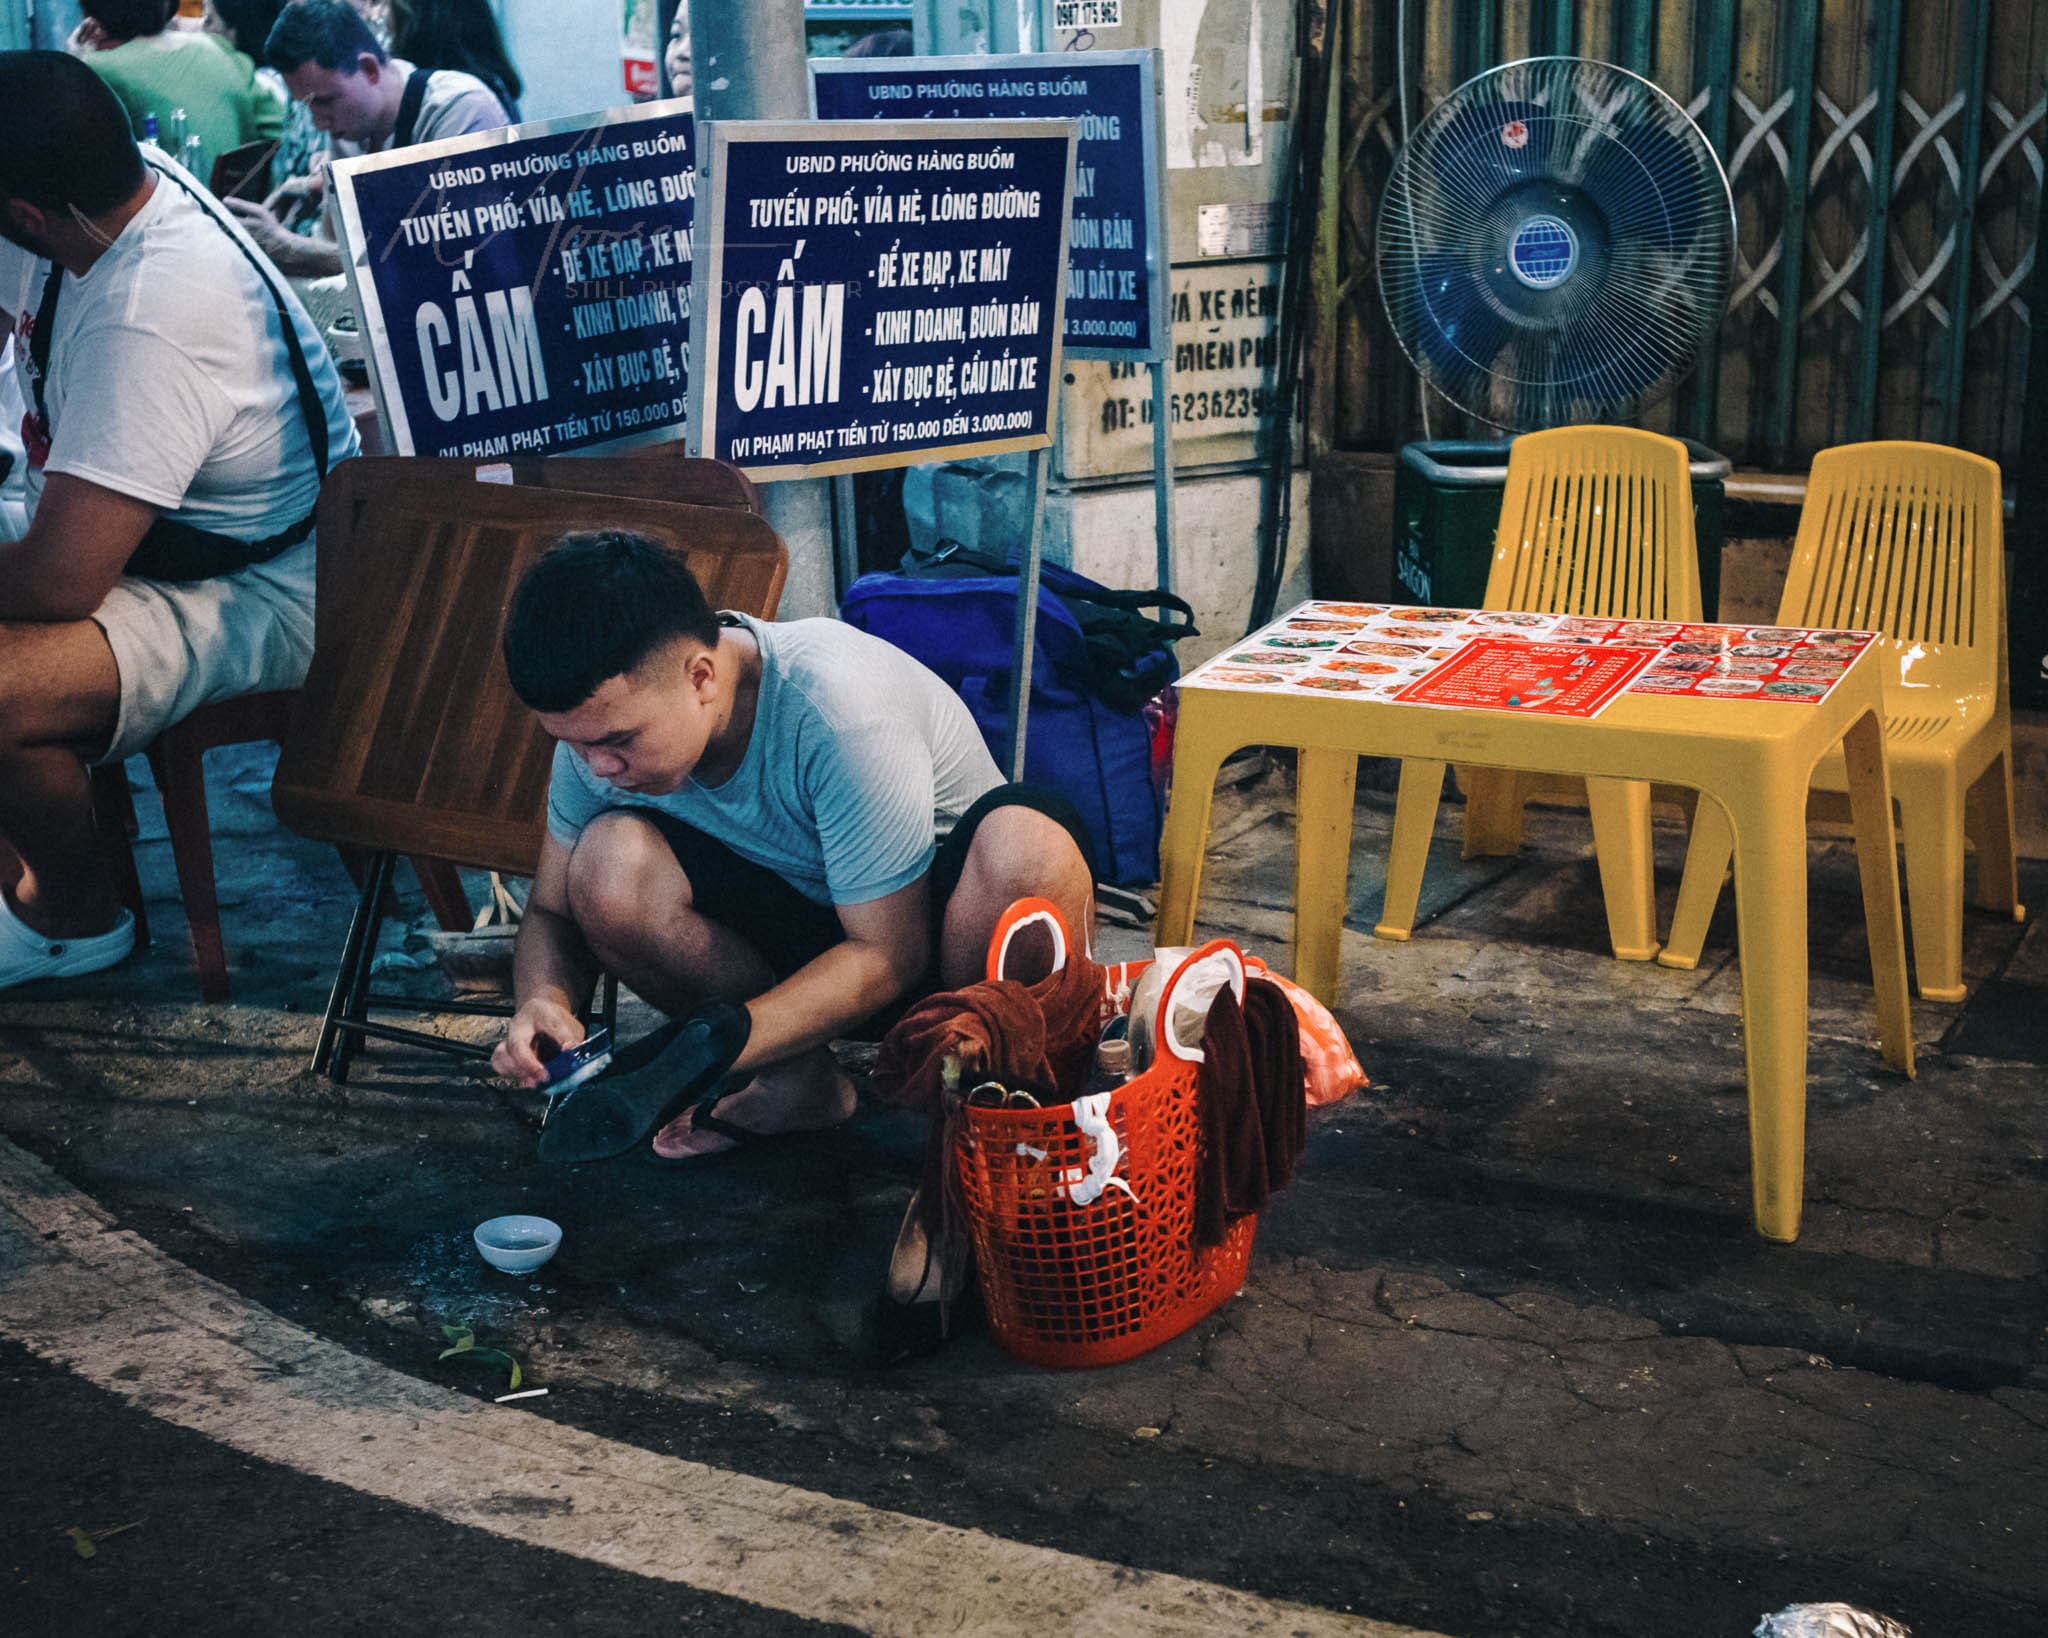 Night street scene with man cleaning shoes in urban Hanoi Vietnam